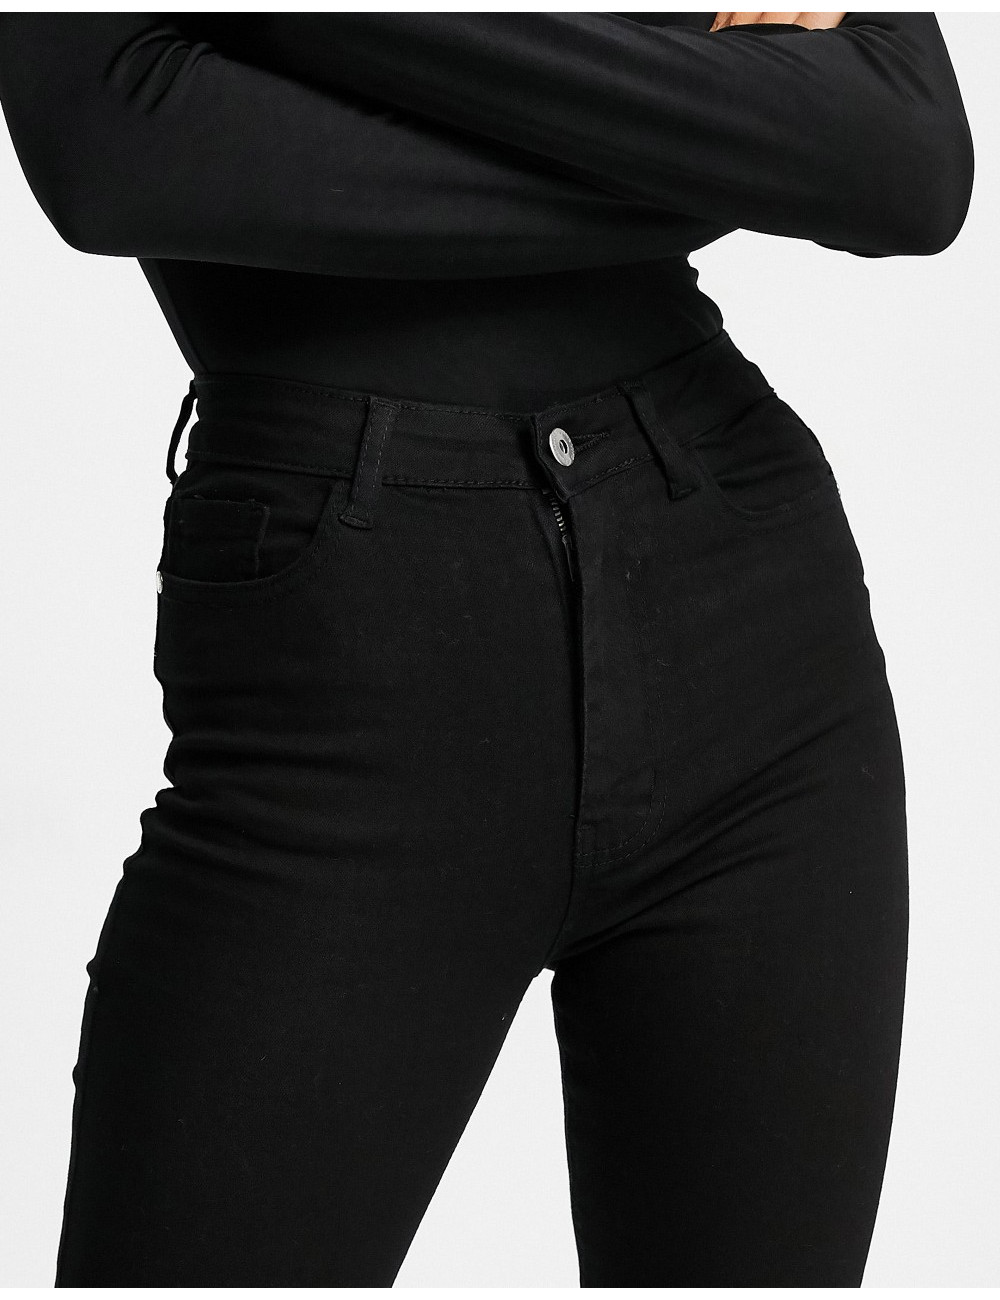 Femme Luxe skinny jeans...